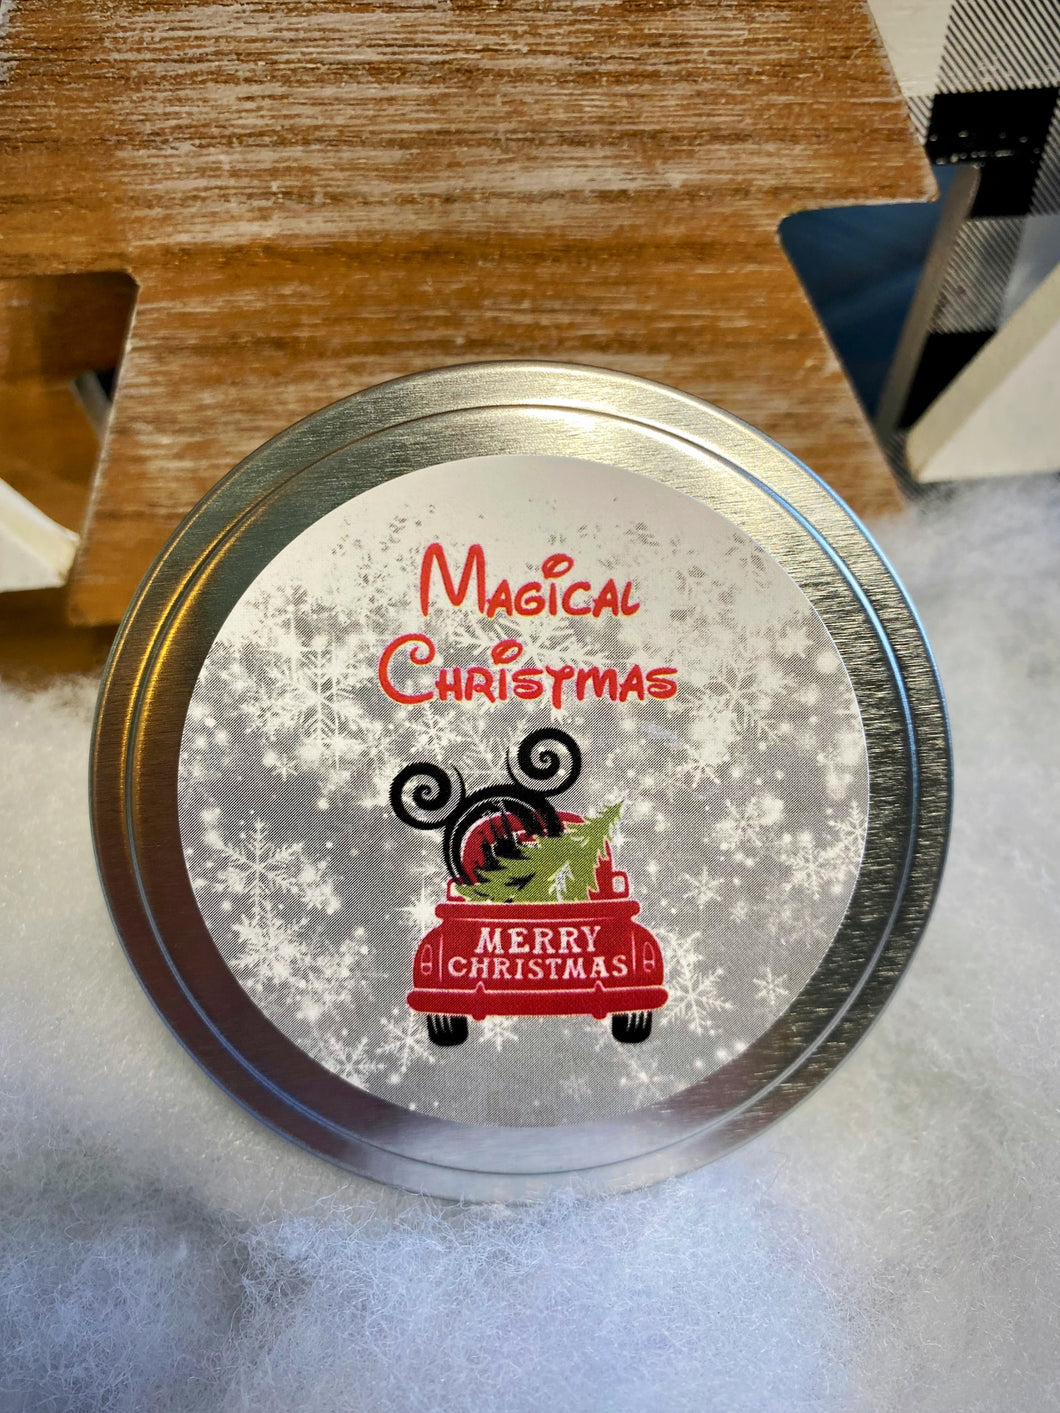 Magical Christmas Candles & Wax Melts